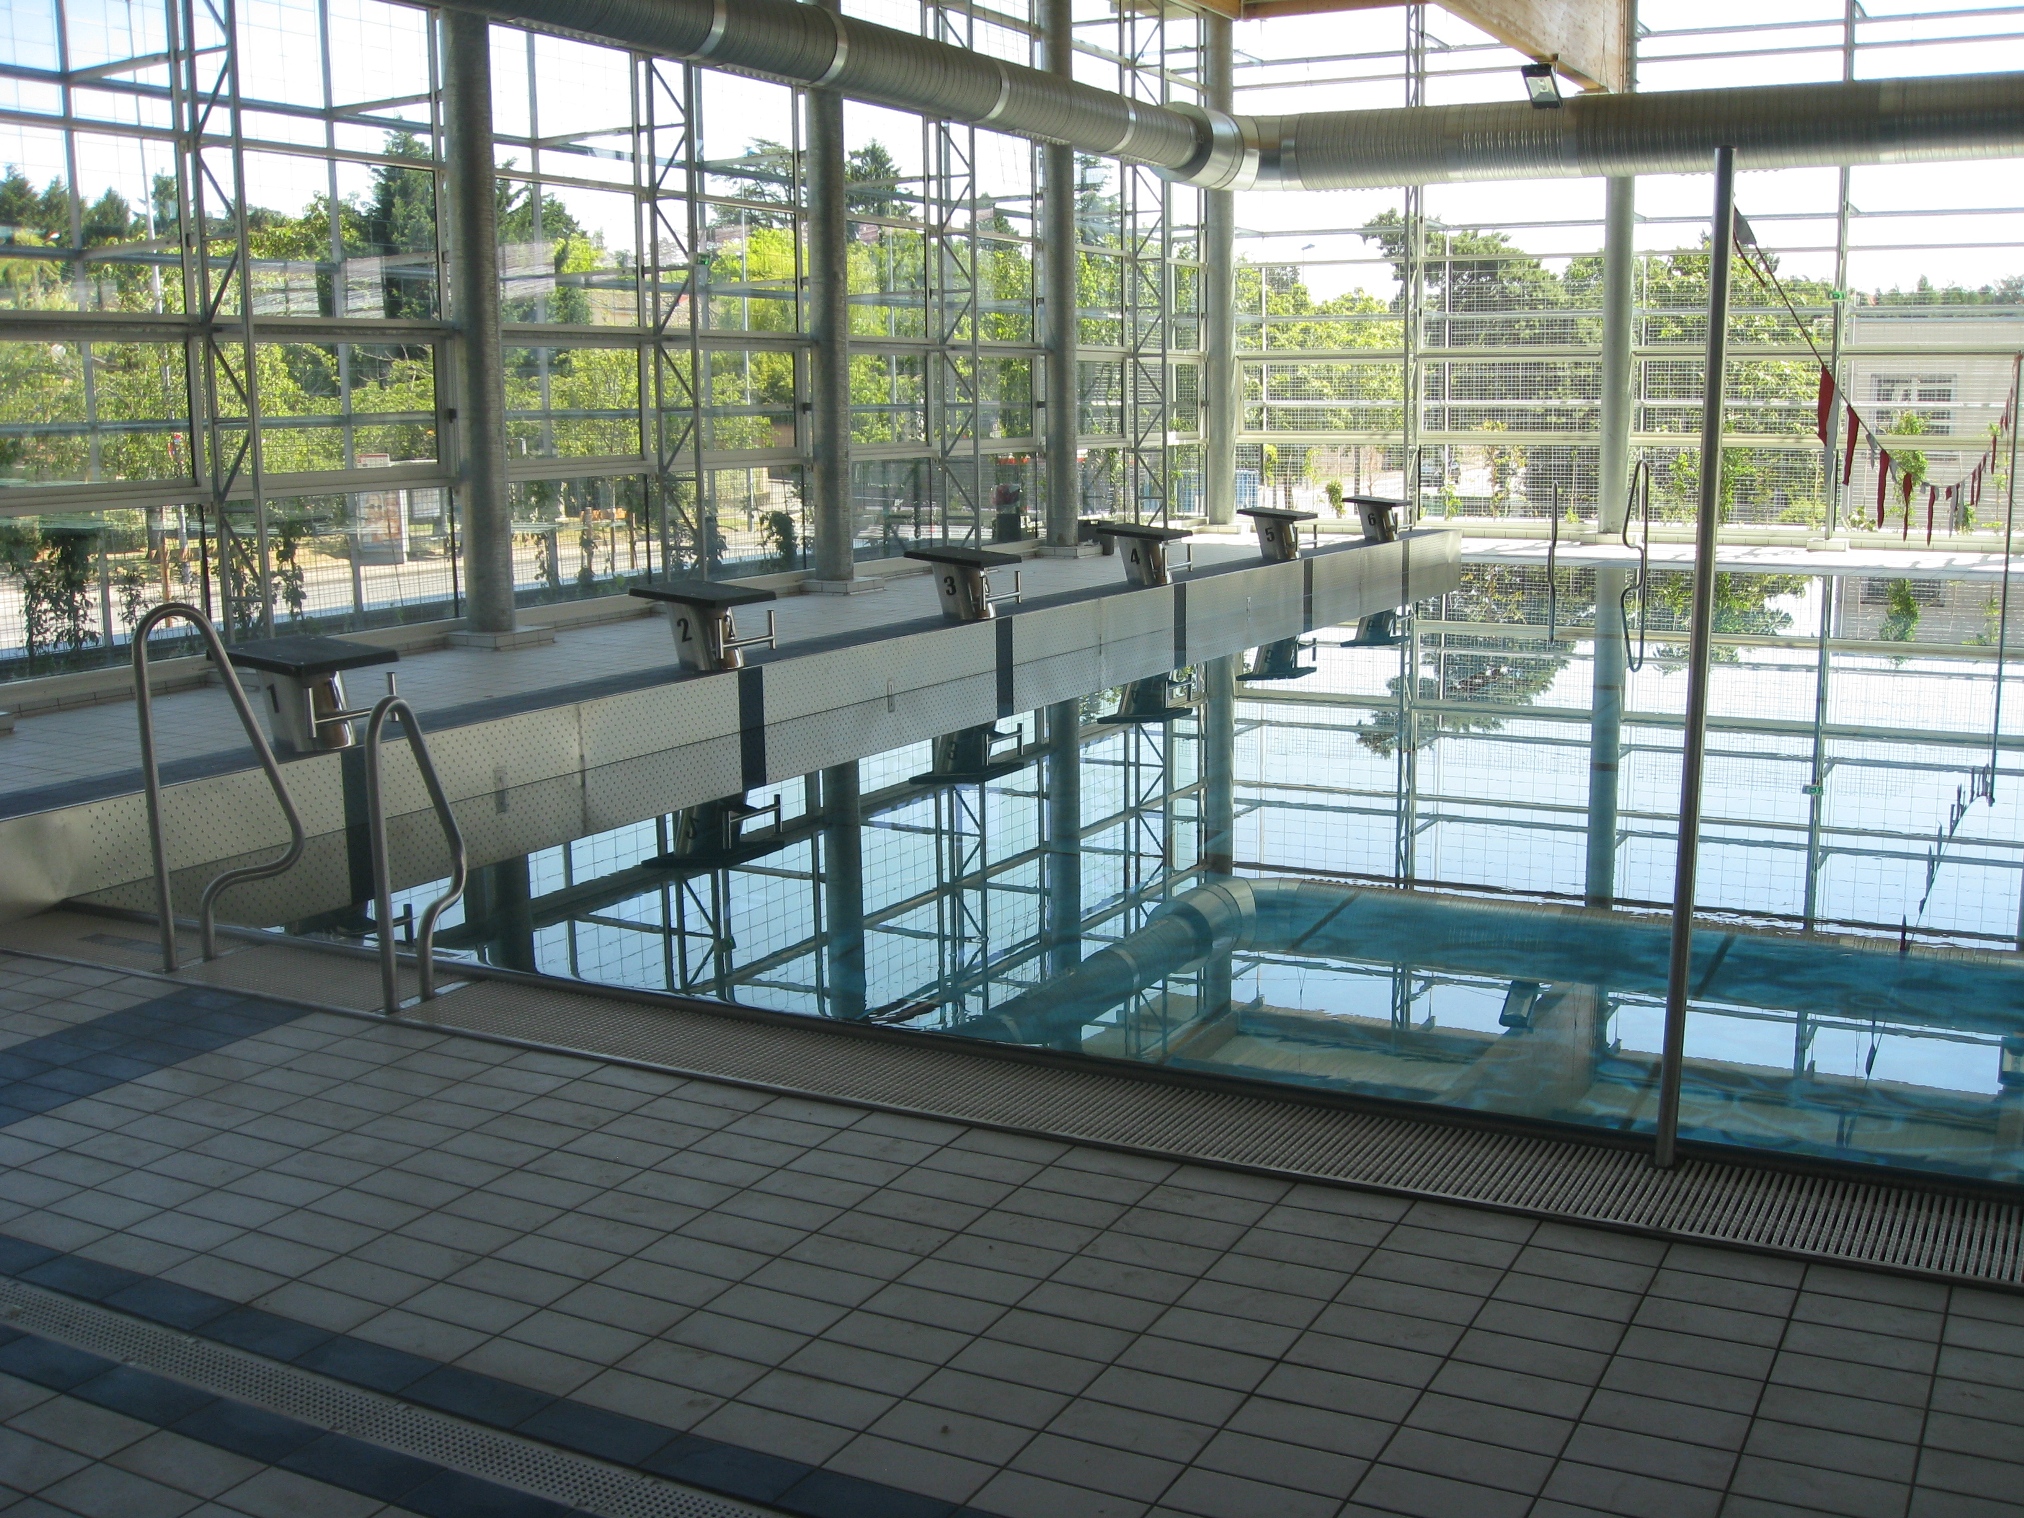 Bassin sportif de la piscine le Kubdo de Ste Foy lès Lyon